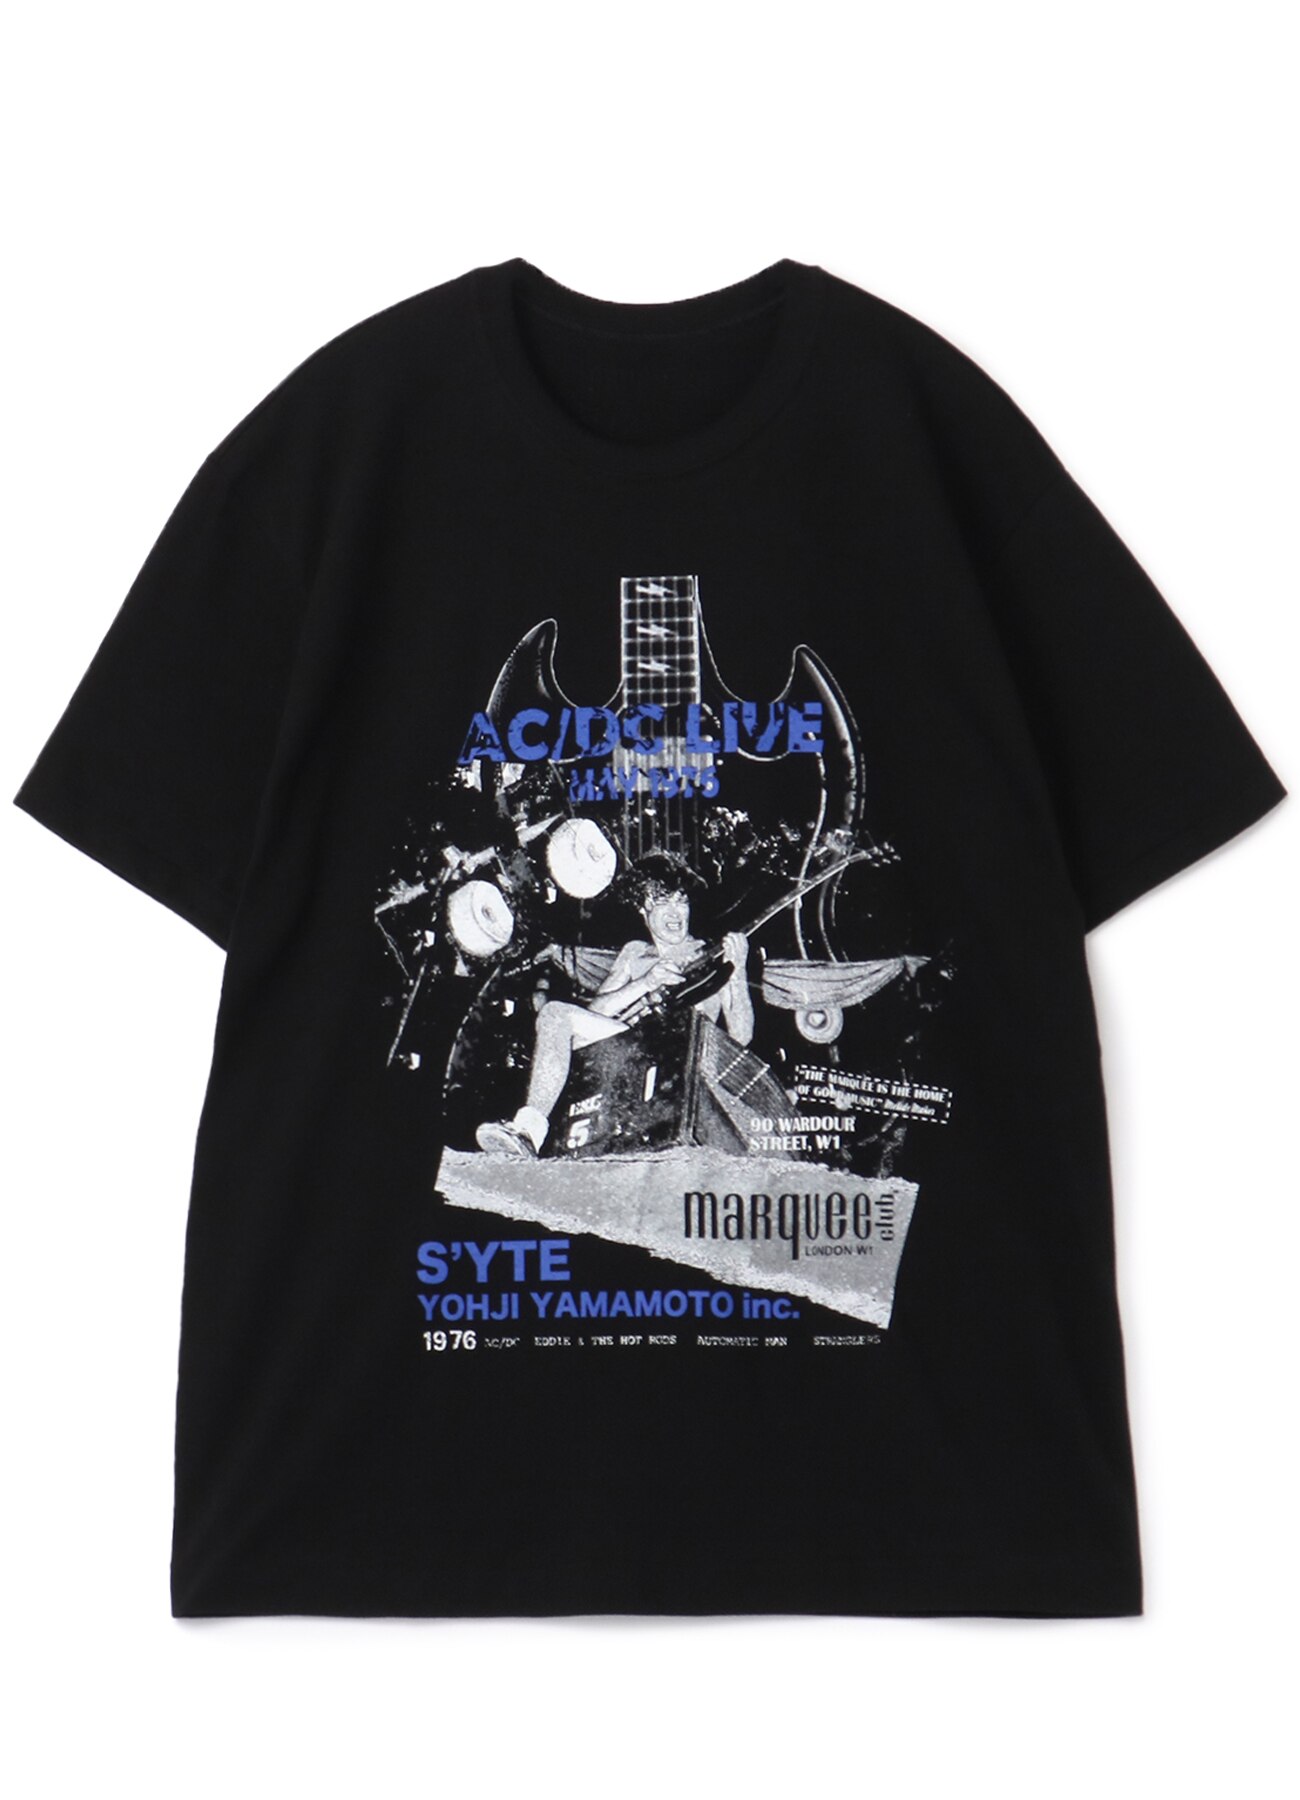 S'YTE × marquee club(R) COLLECTION AW21-22 | Yohji Yamamoto 